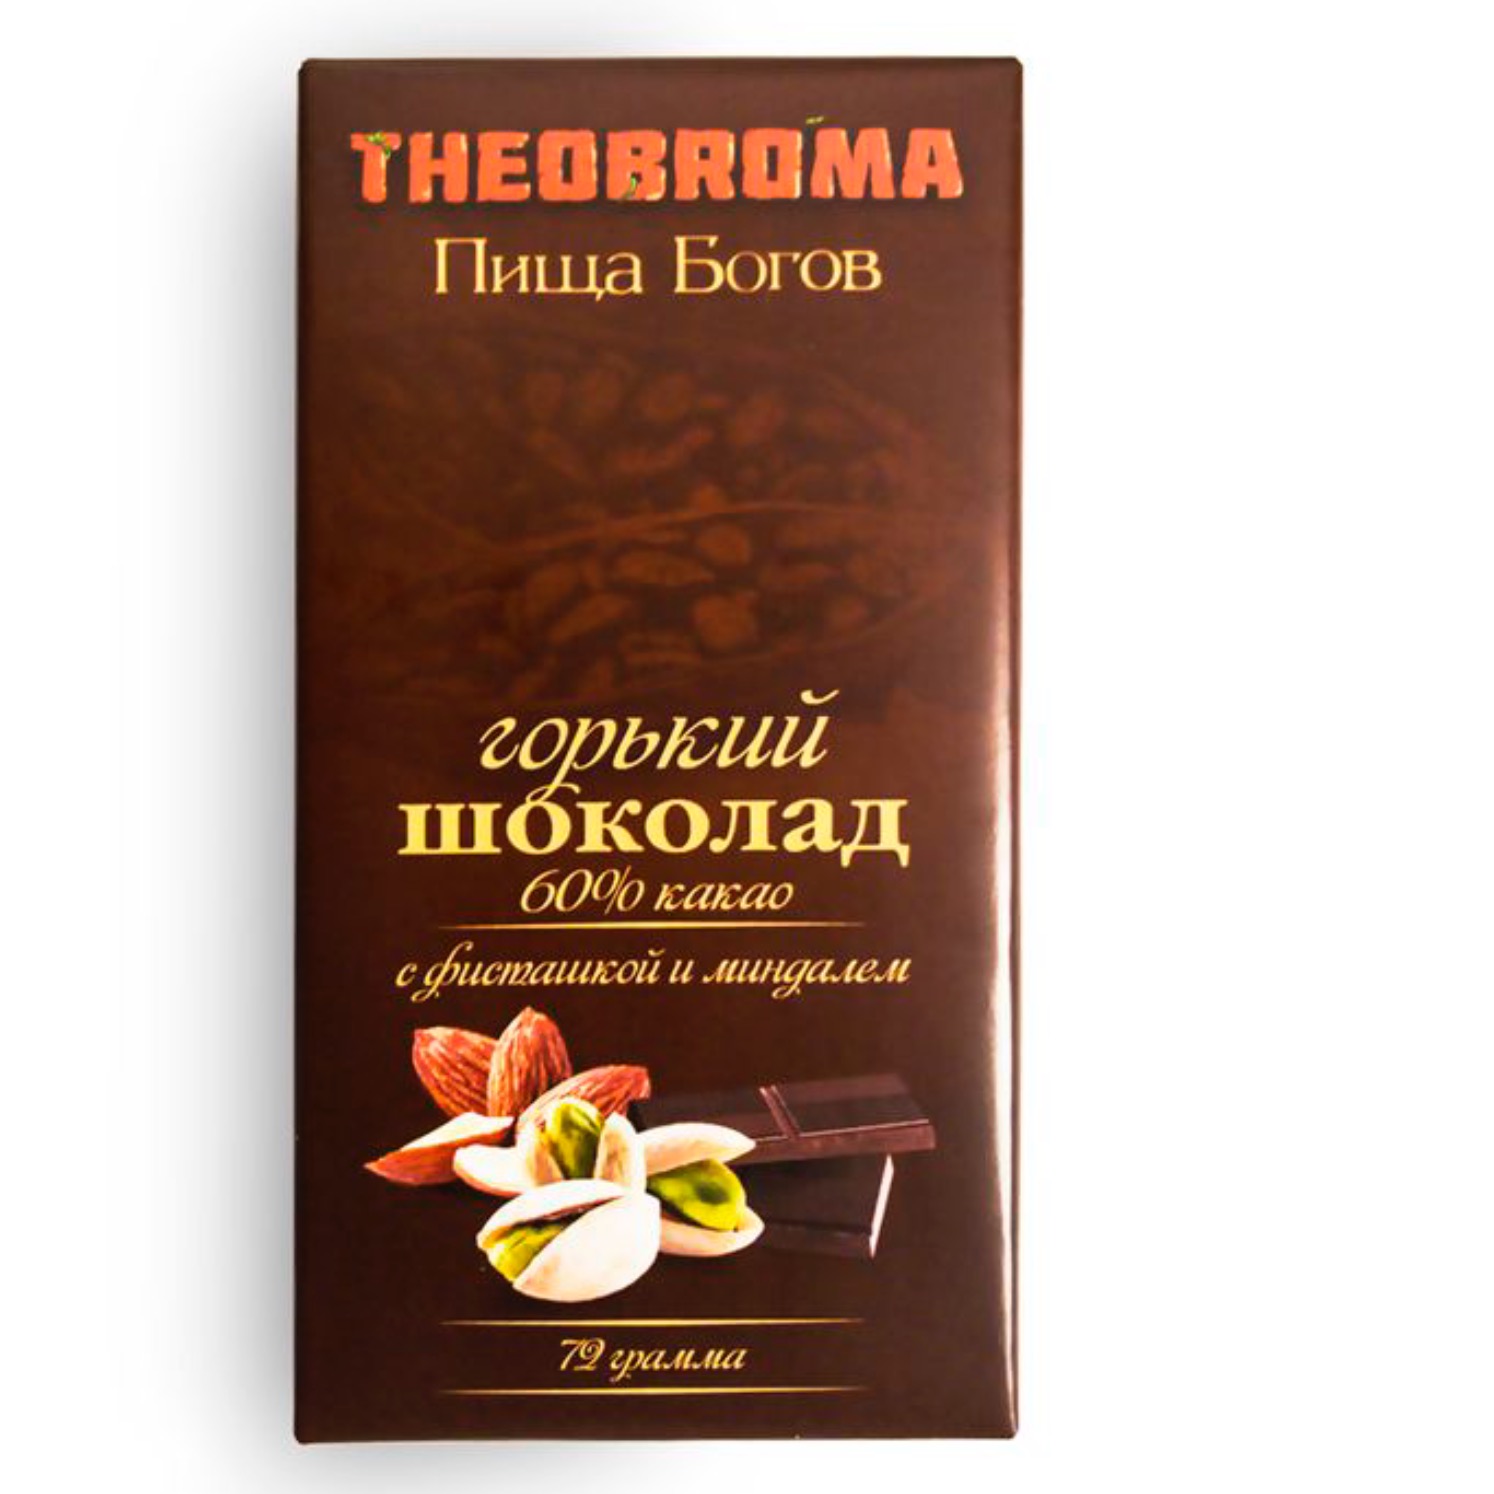 Горький шоколад 60 % с фисташкой и миндалем "Theobroma", 72 г